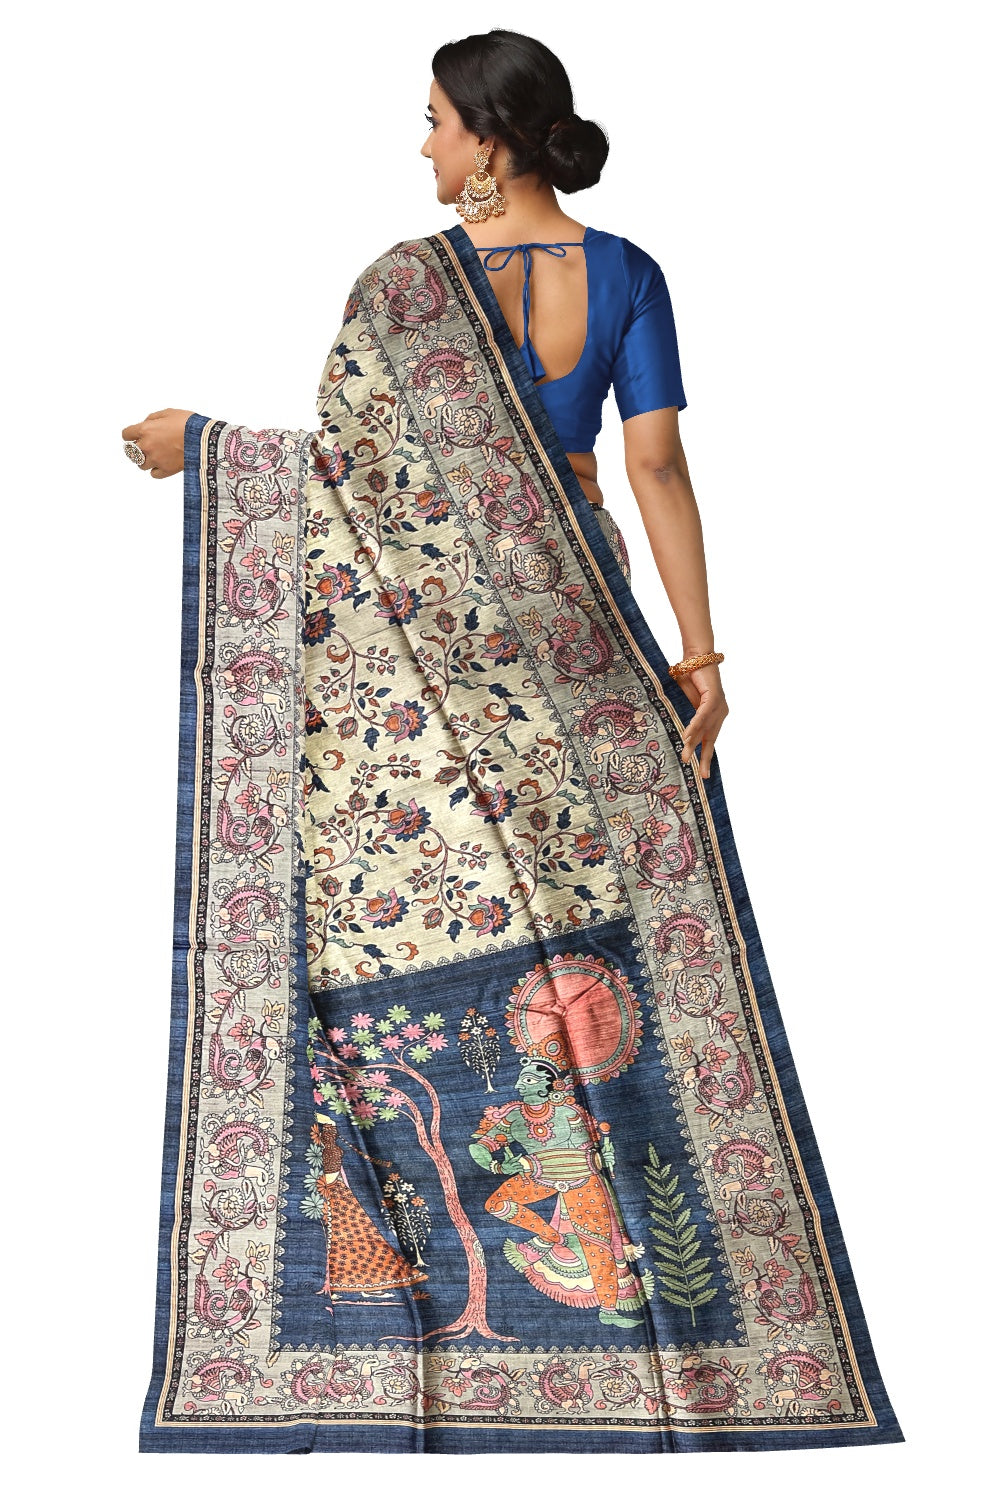 Southloom Tussar Silk Kalamkari Design Vishu Themed Krishna Radha Saree